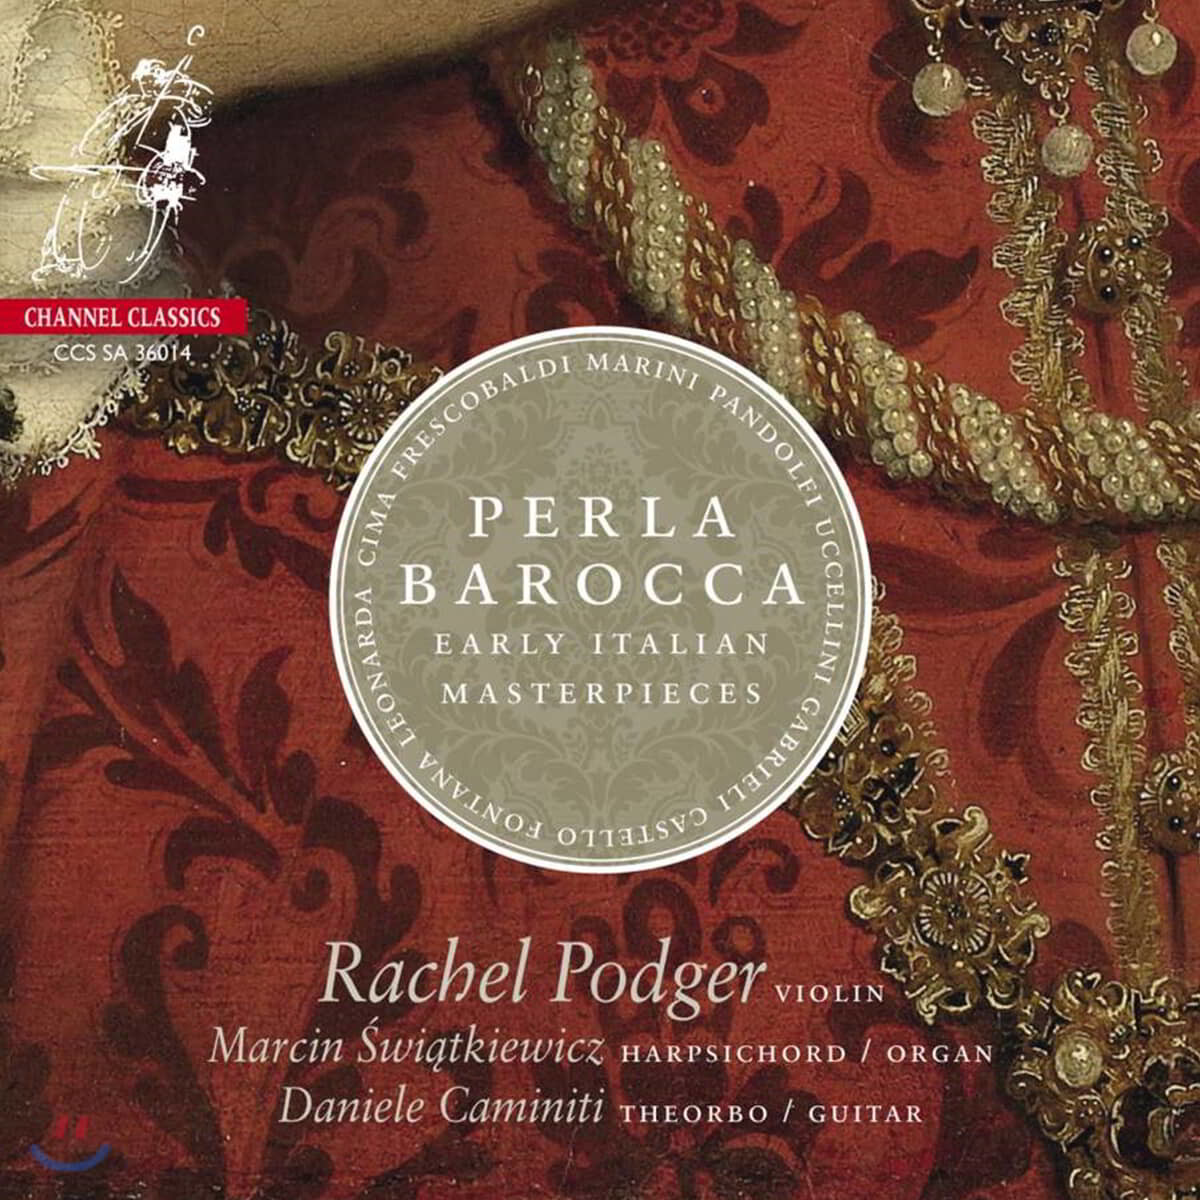 Rachel Podger 바로크의 진주 - 초기 이탈리아 바이올린 걸작들 (Perla Barocca - Early Italian Masterpieces) 레이첼 포저